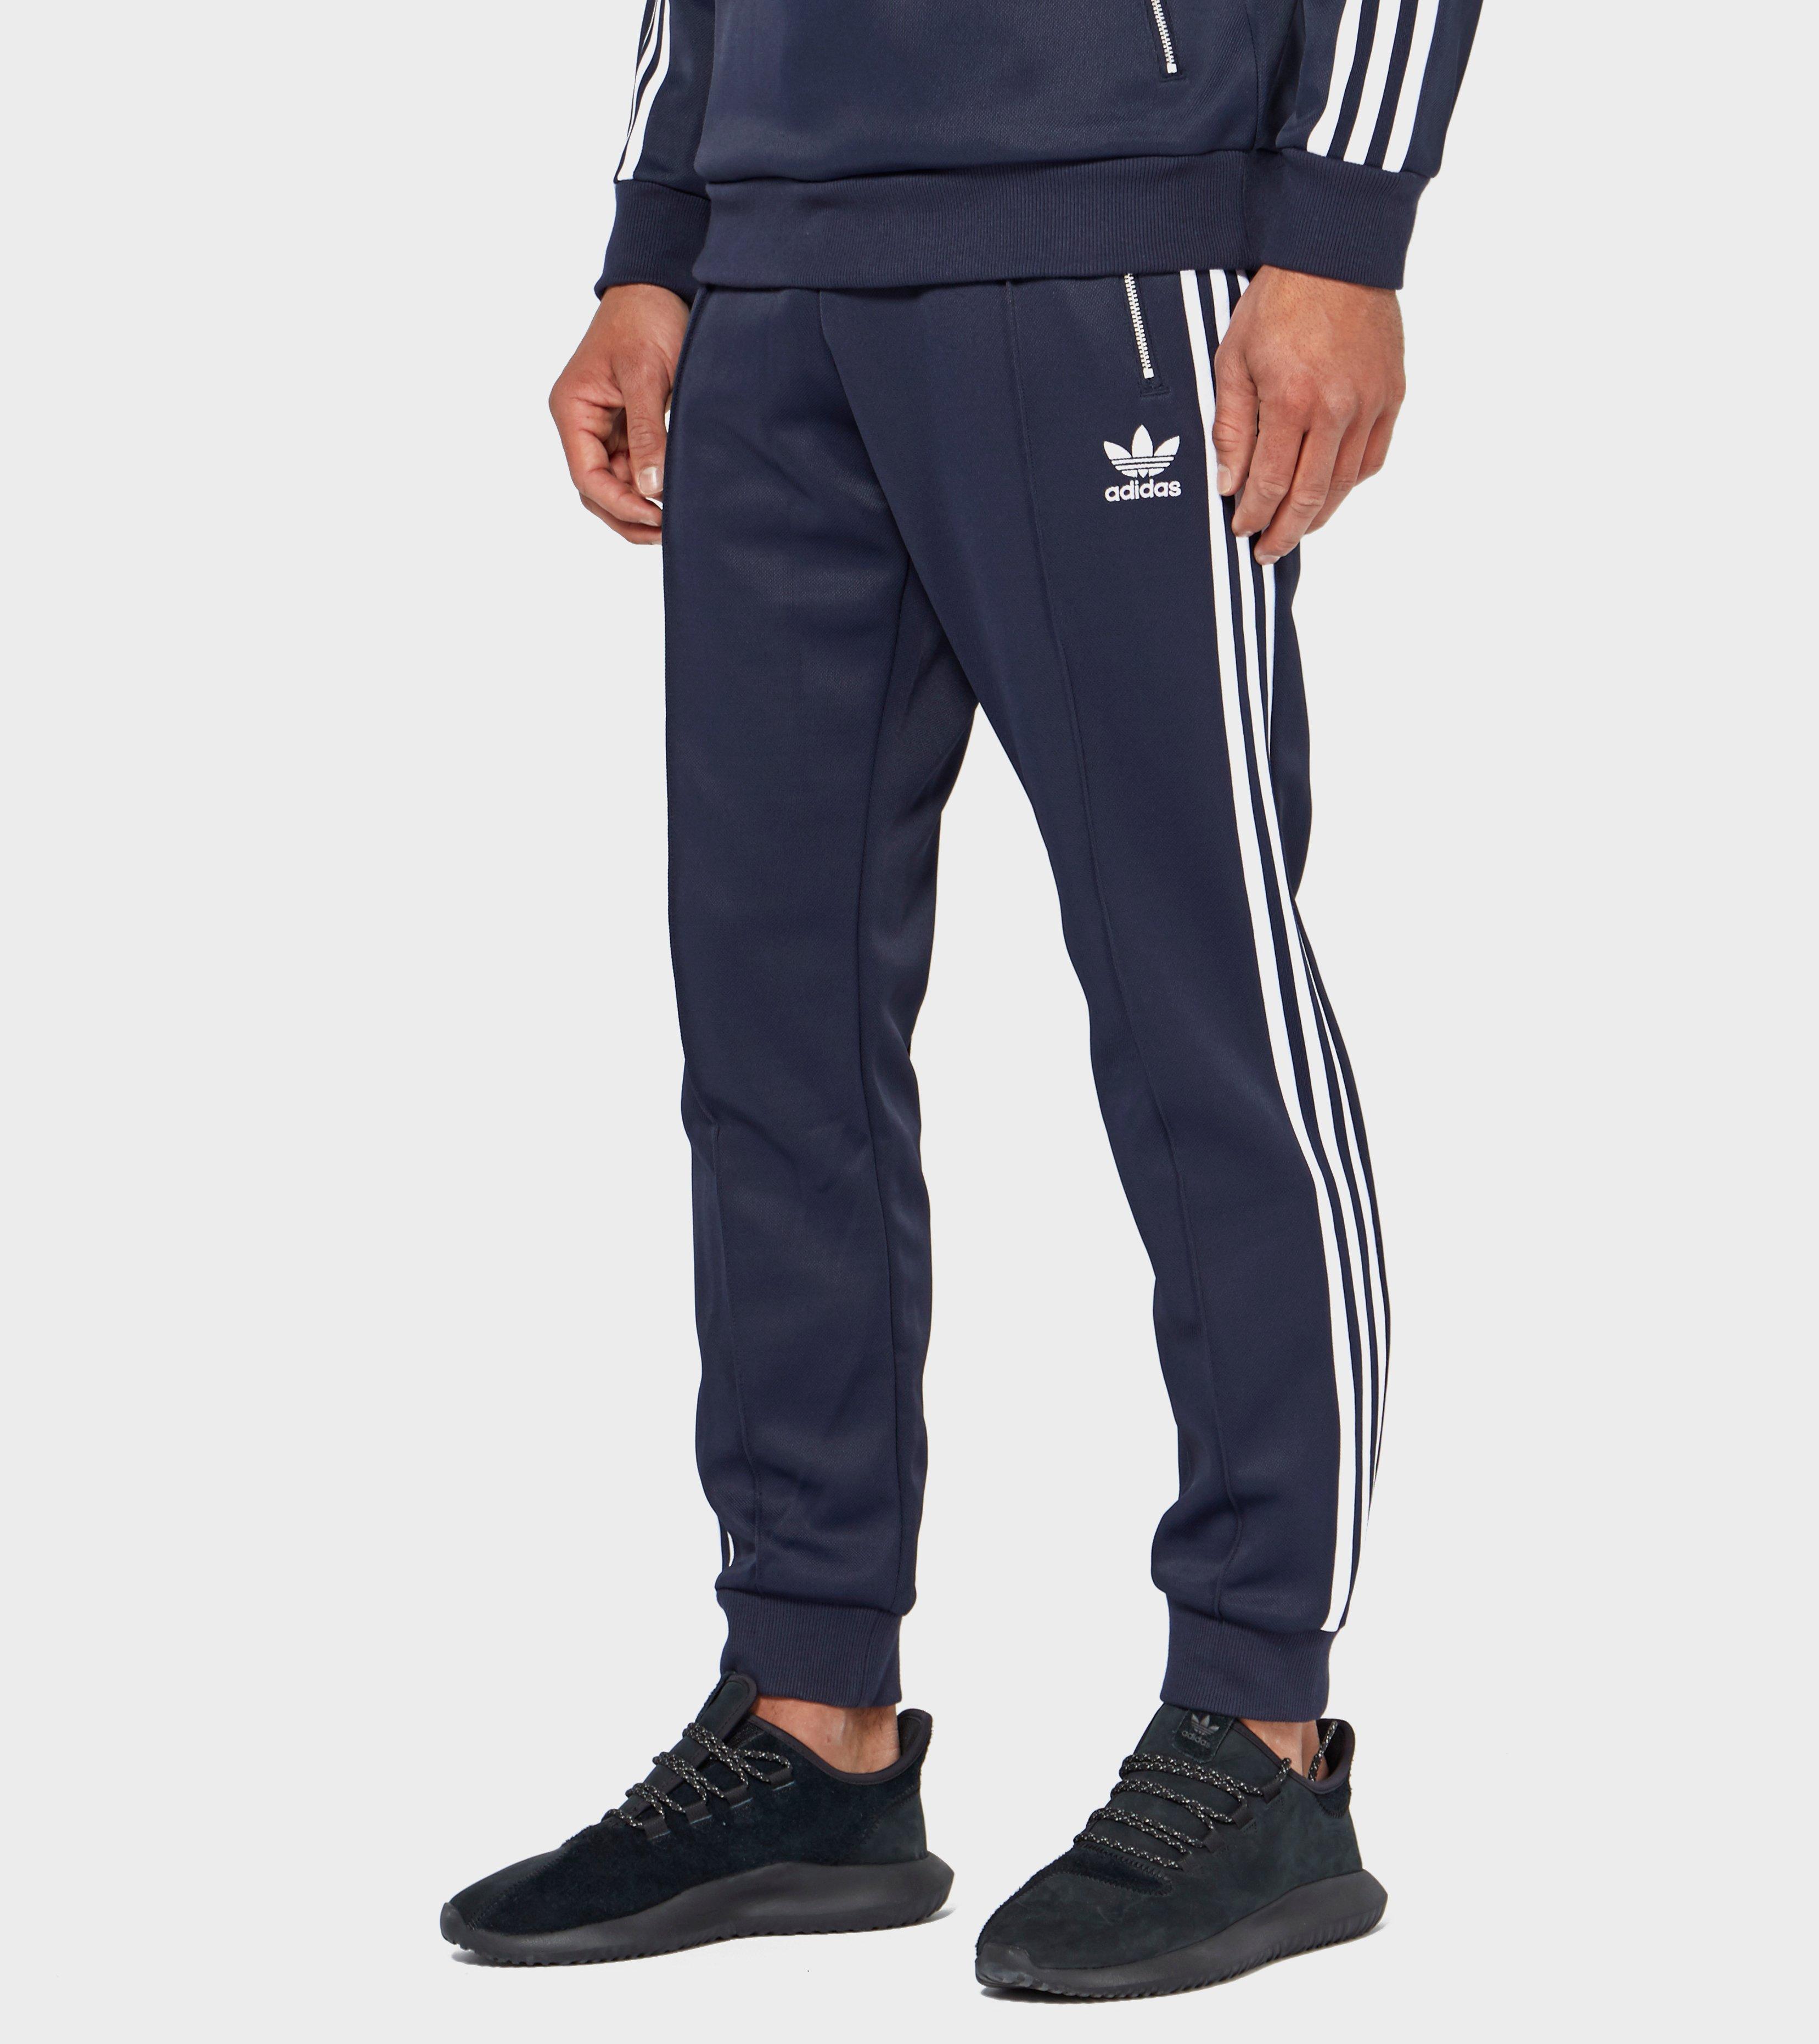 adidas Originals Cotton Cntp Track Pants in Blue for Men - Lyst